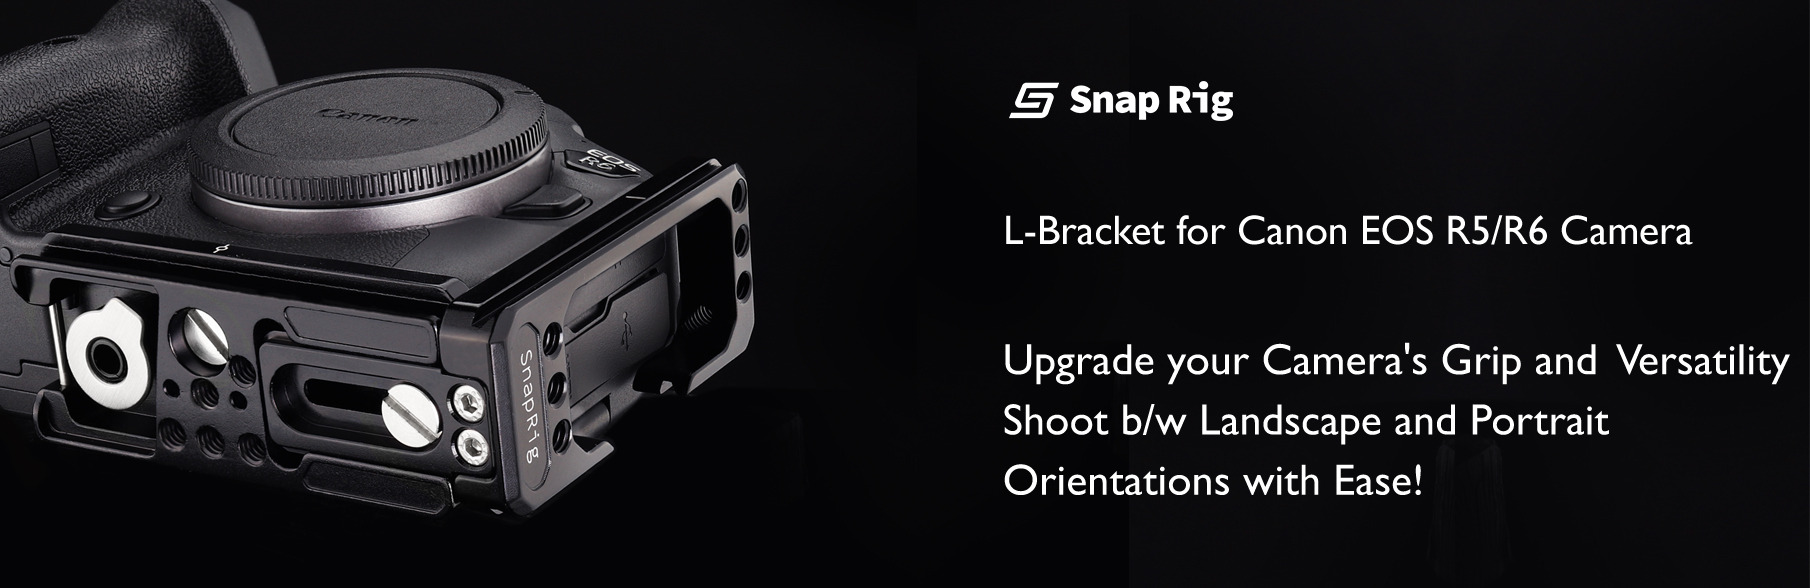 Proaim Snaprig L-Bracket for Canon EOS R5/R6 Camera LB01